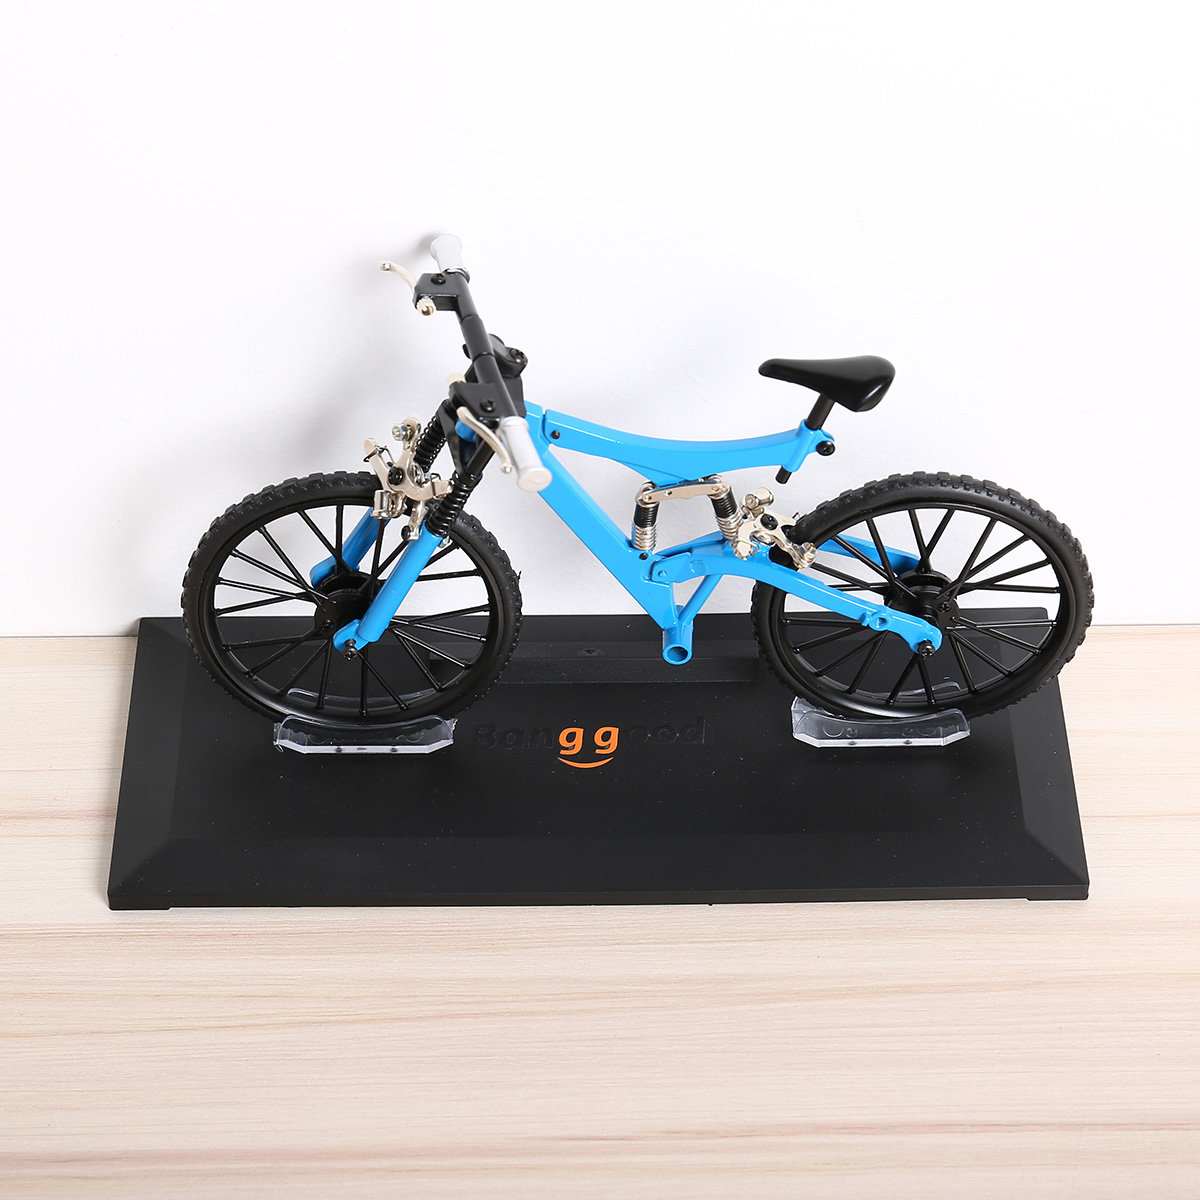 Banggood-Bicycle-Model-Simulation-DIY-Alloy-MountainRoad-Bicycle-Set-Decoration-Gift-Model-Toys-979545-1